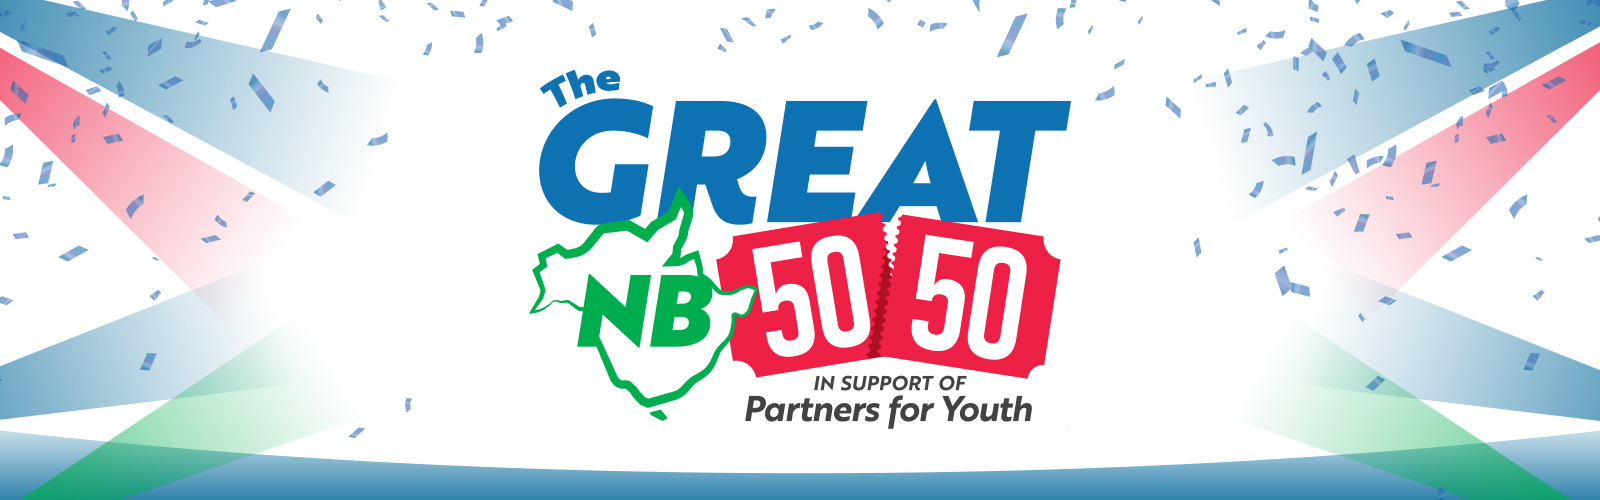 The Great New Brunswick 50/50